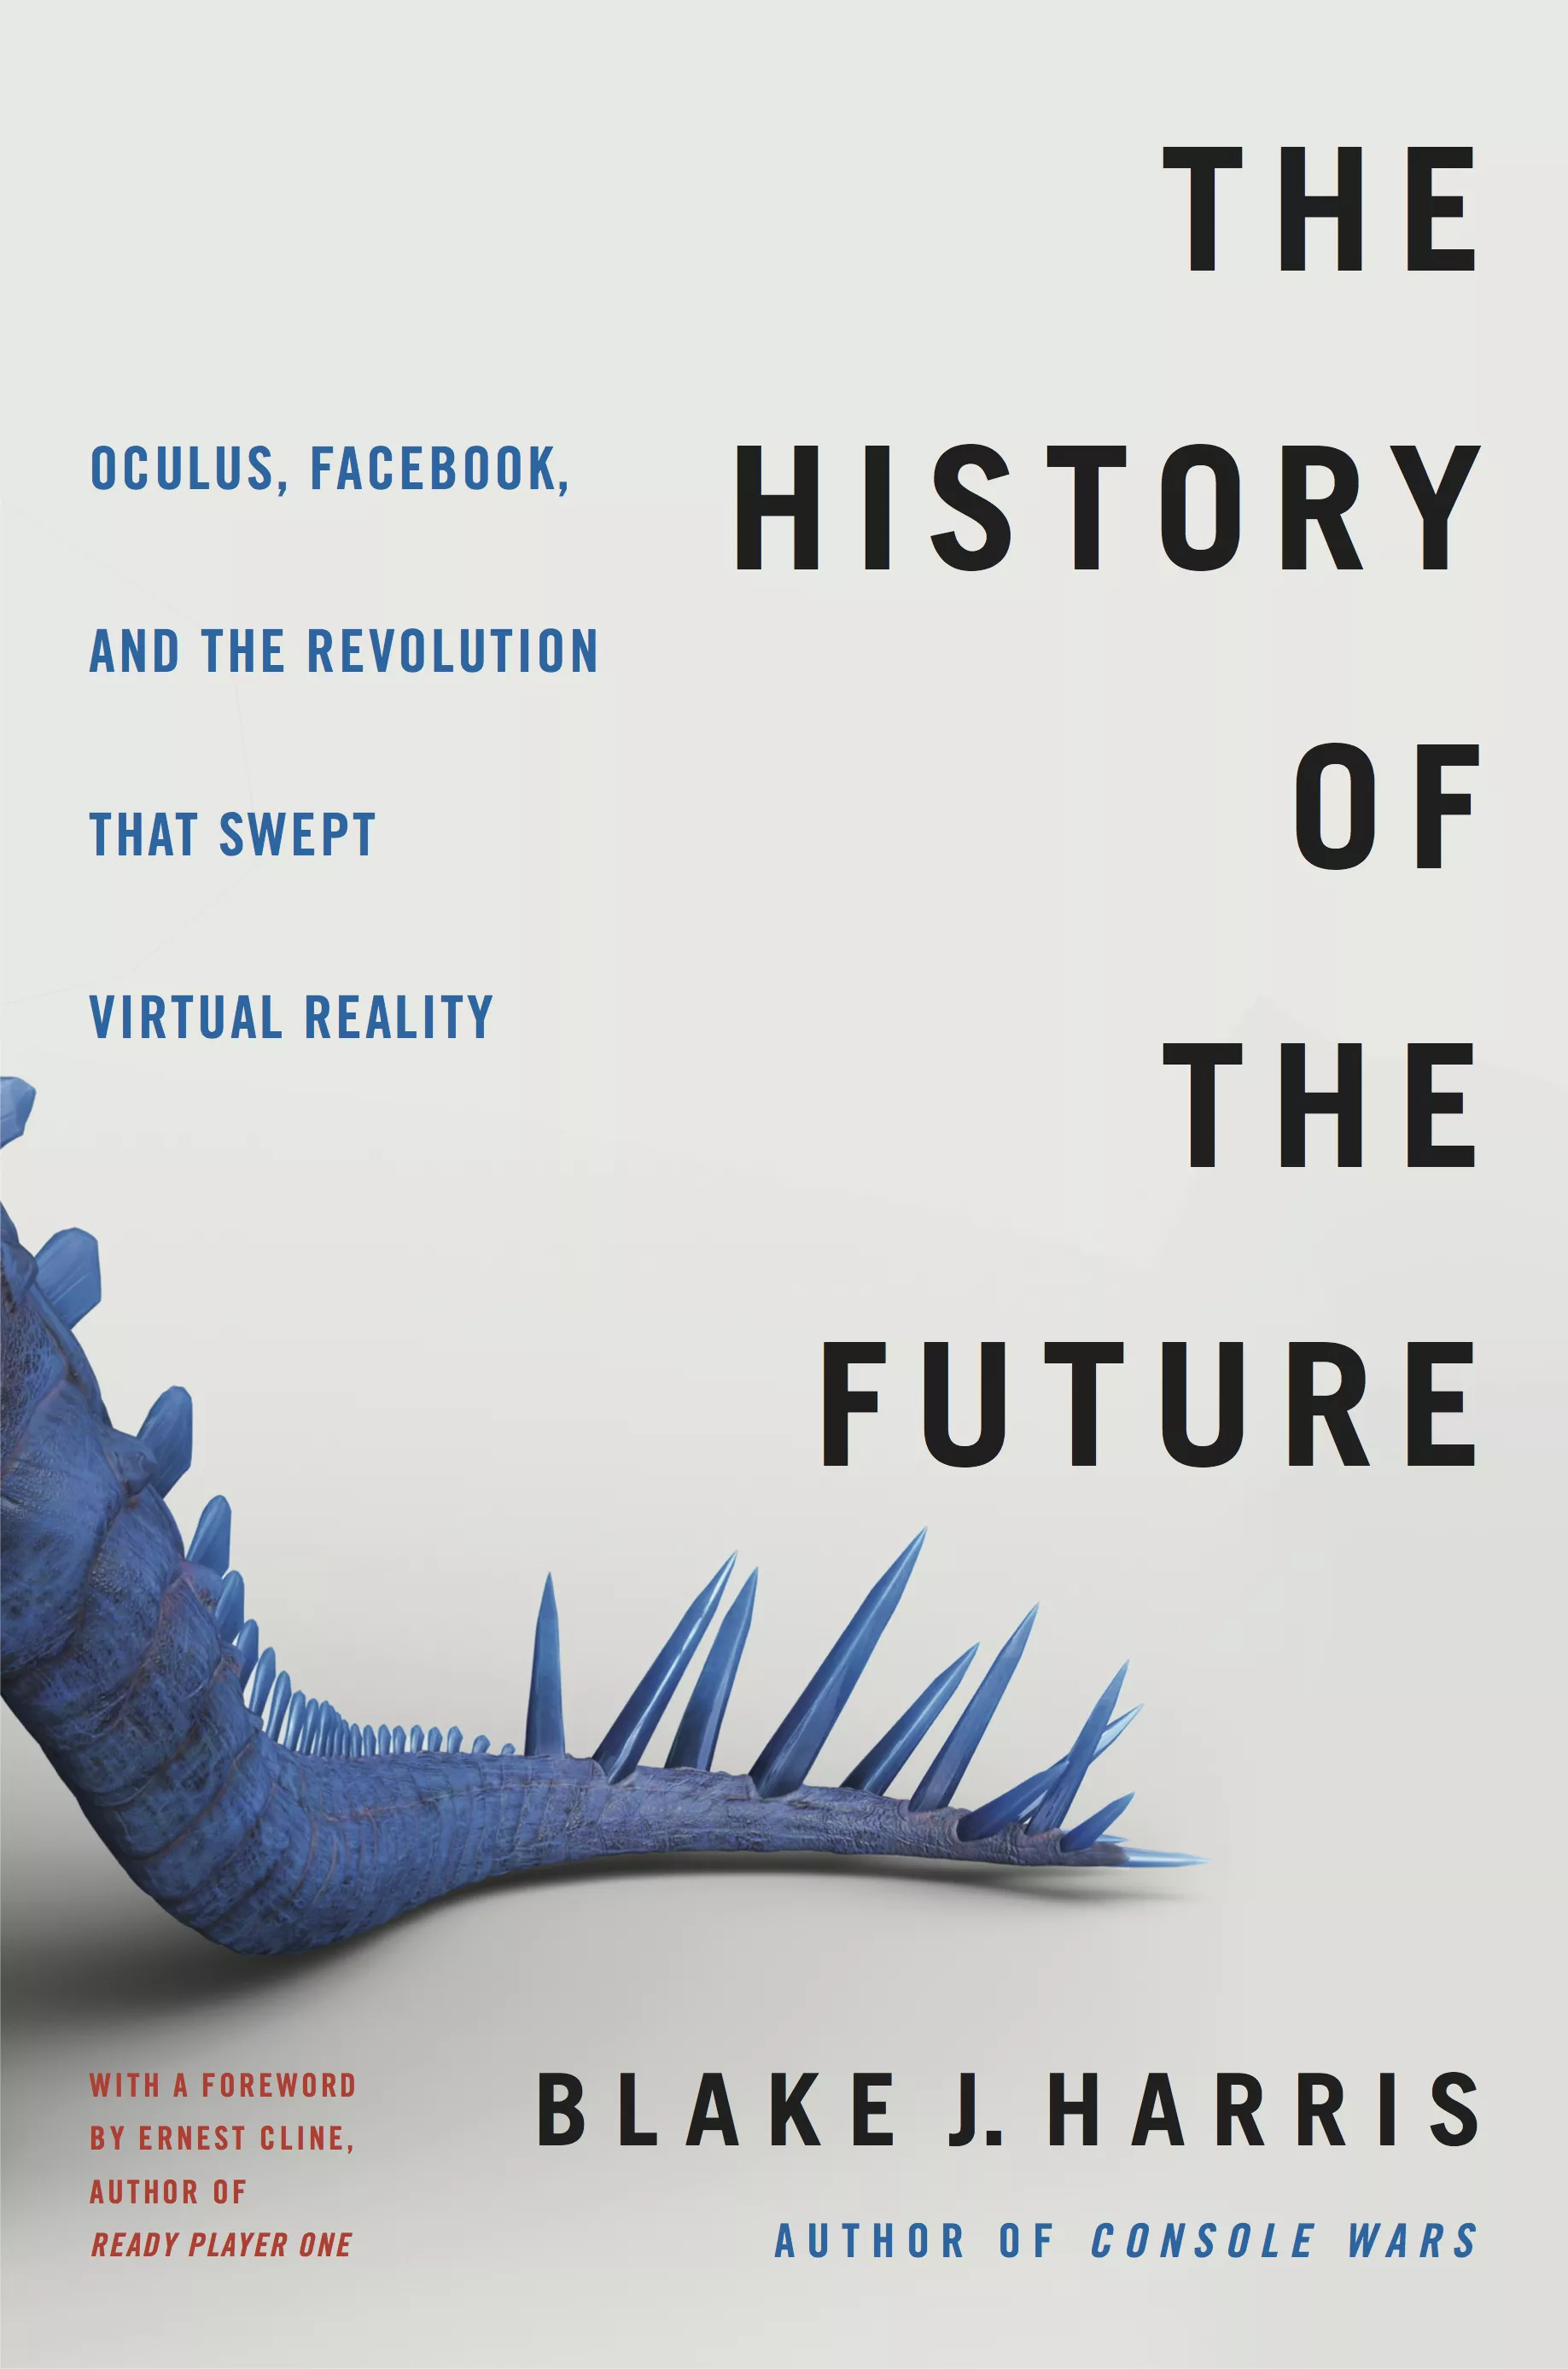 Blake J. Harris 著「The History of the Future」 - 仮想現実に関する素晴らしい本の 1 つ